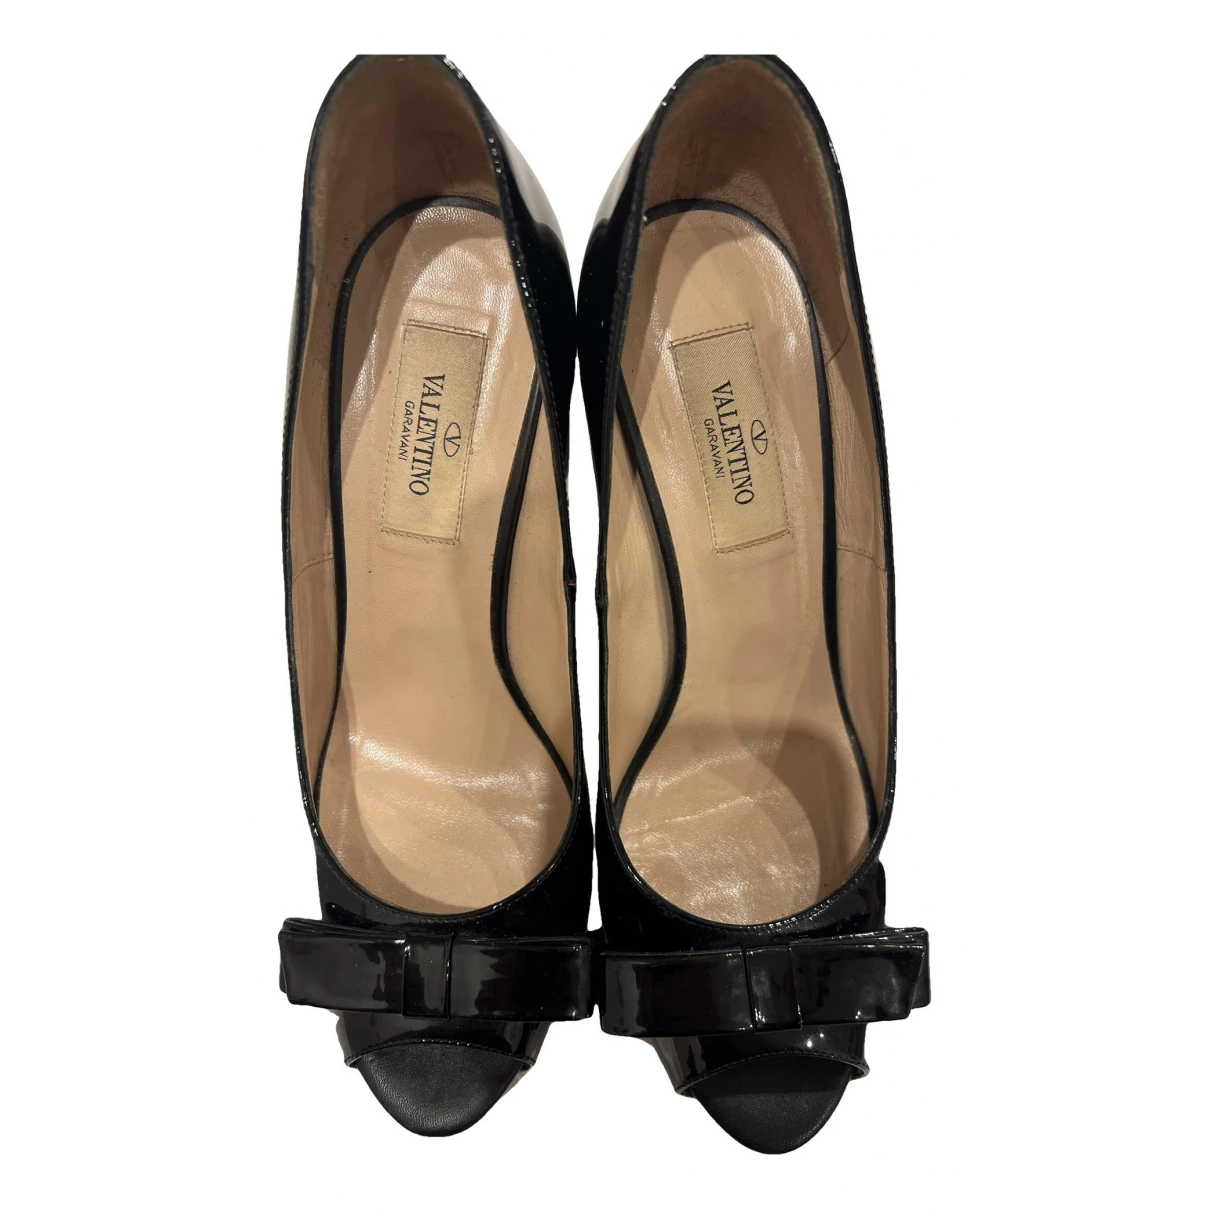 shoes Valentino Garavani sandals for Female Patent leather 36.5 EU. Used condition